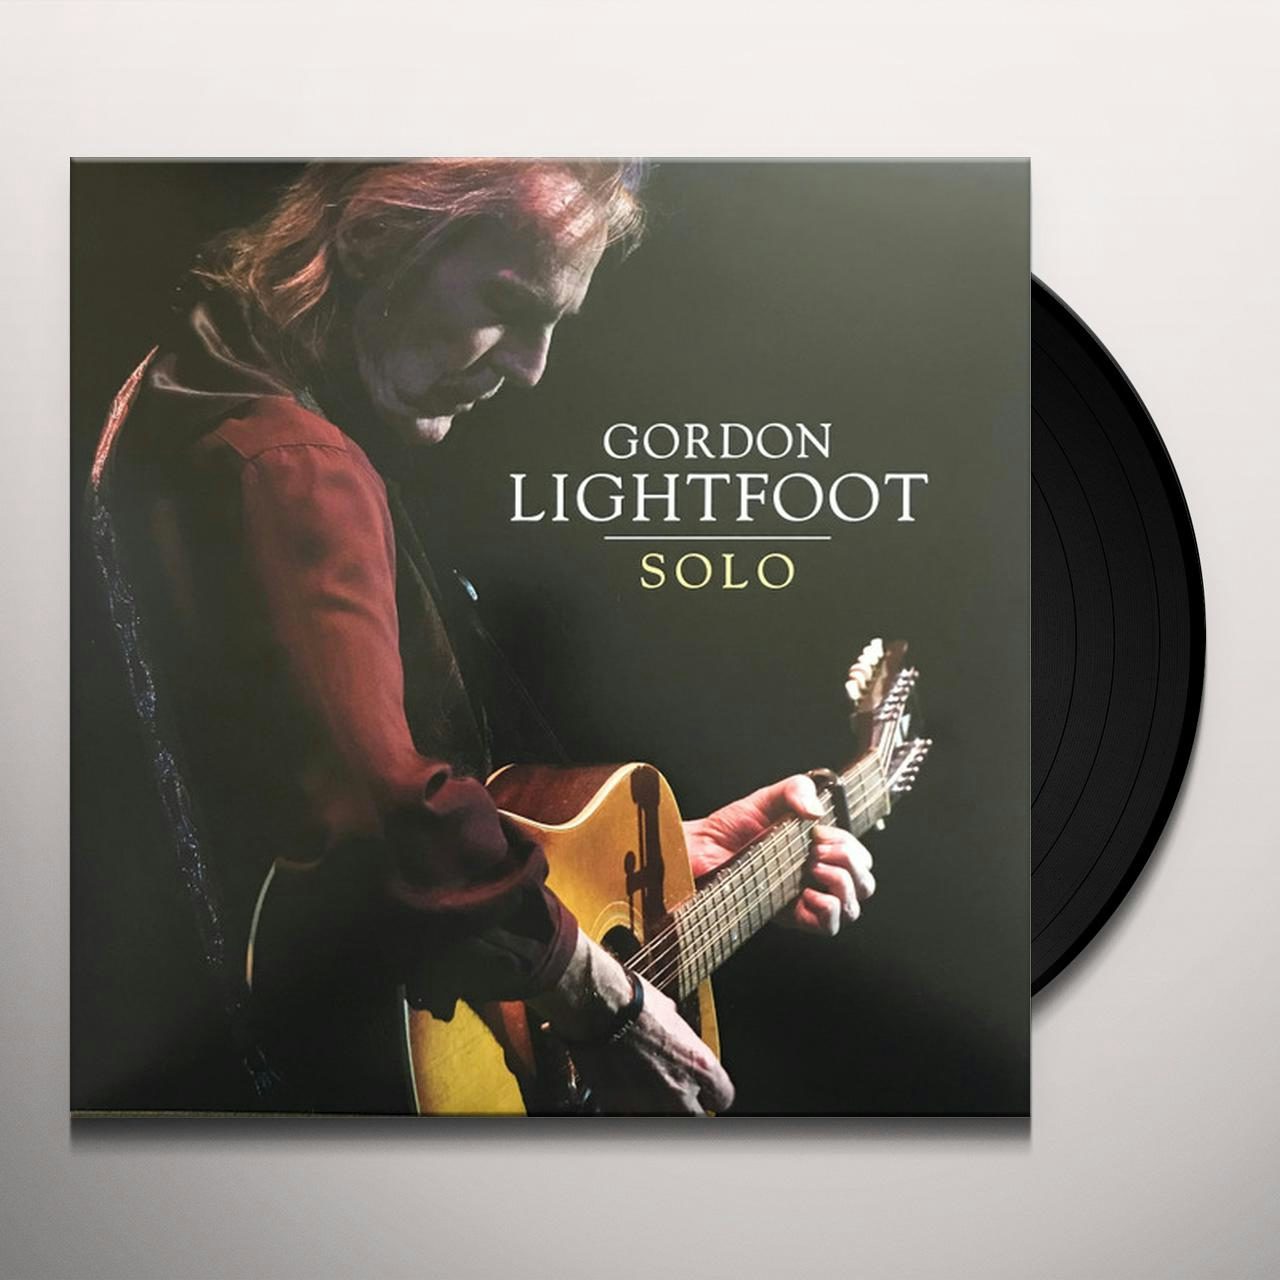 Gordon Lightfoot AN INTRODUCTION TO CD